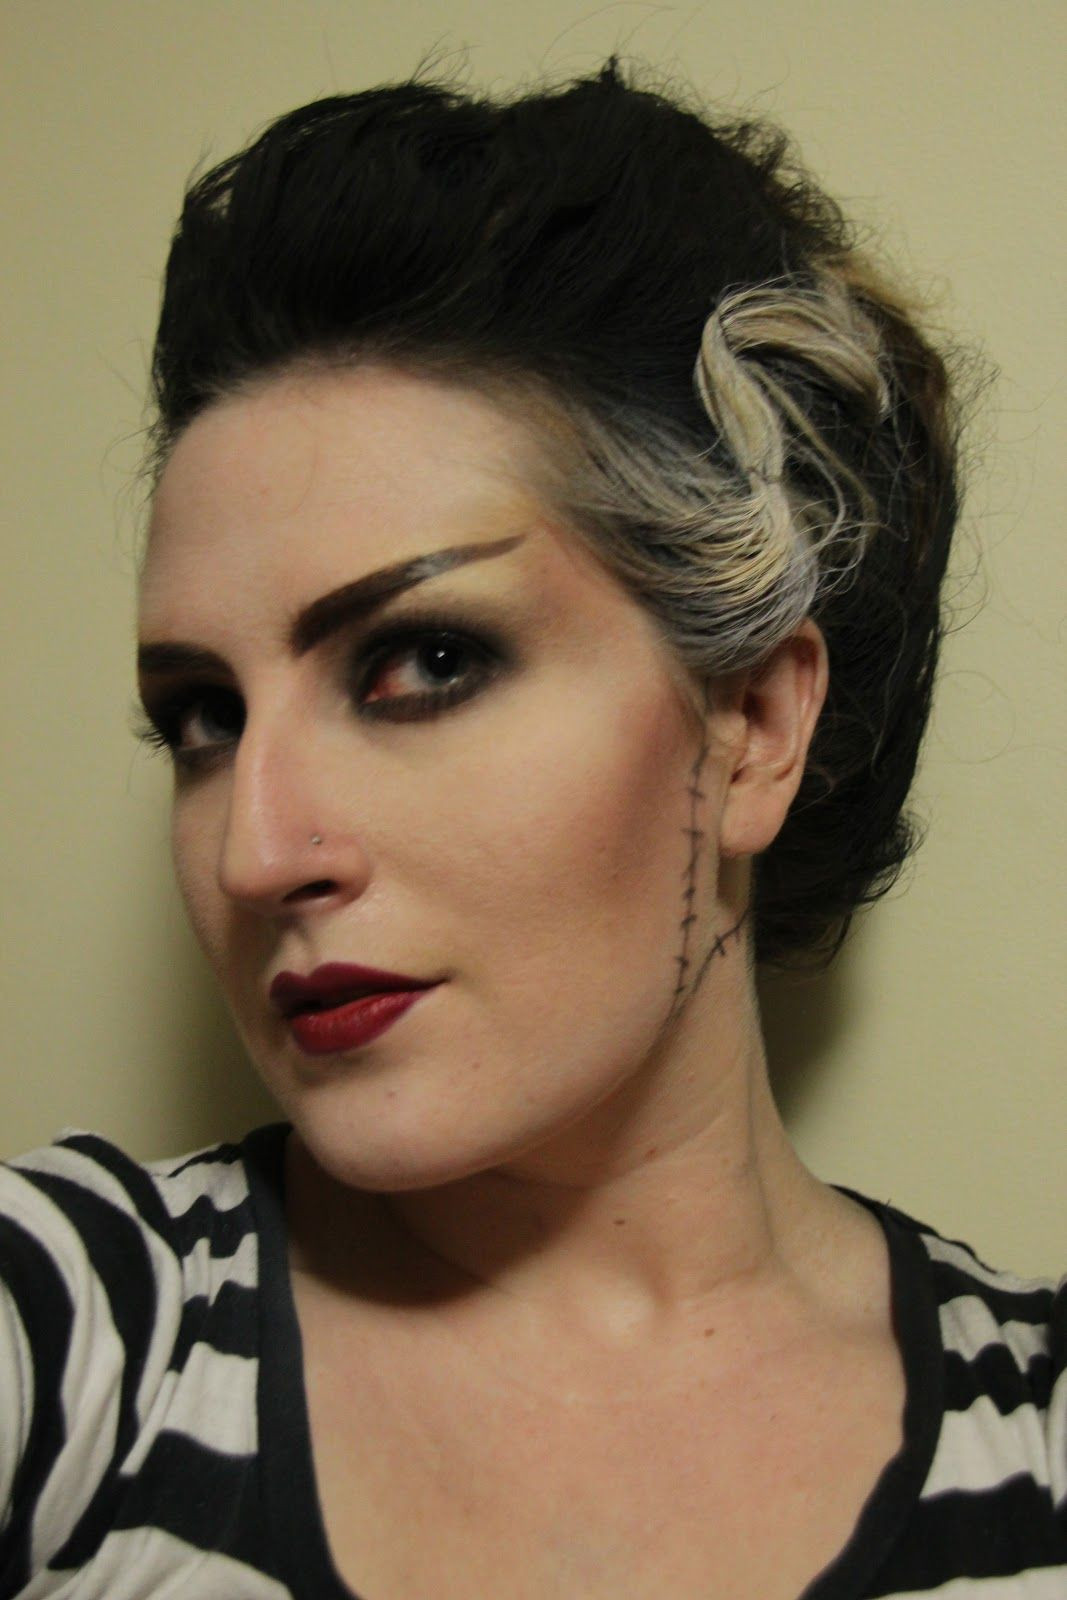 DIY Bride Of Frankenstein Hair
 Bride of Frankenstein Halloween Tutorial